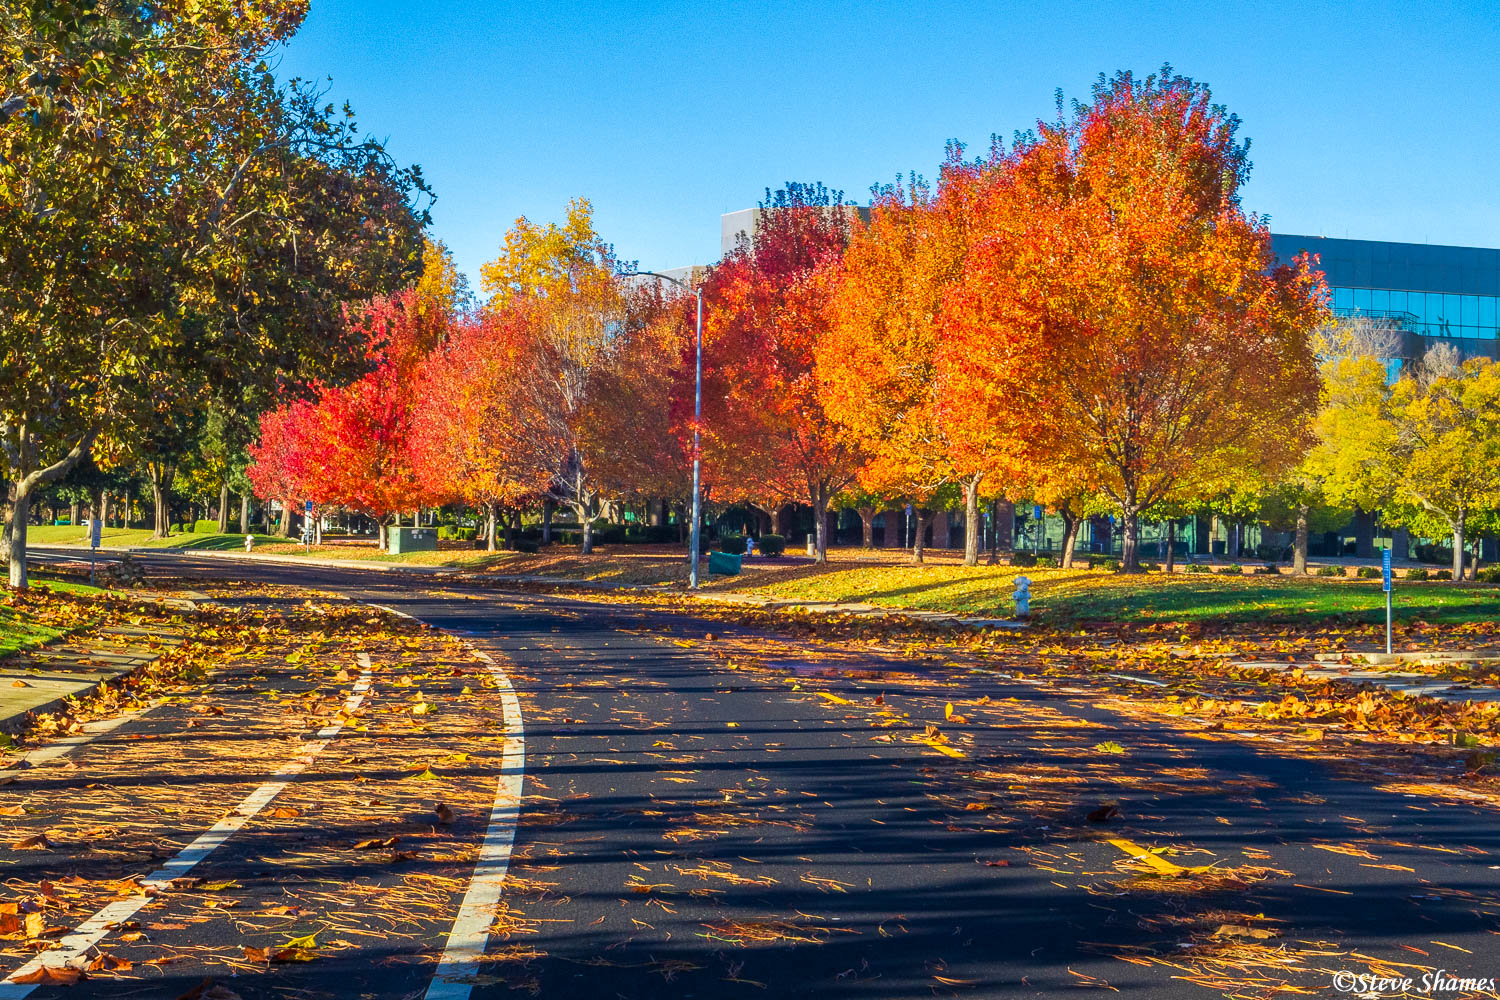 Vivid fall colors in an urban setting, here in Rancho Cordova.